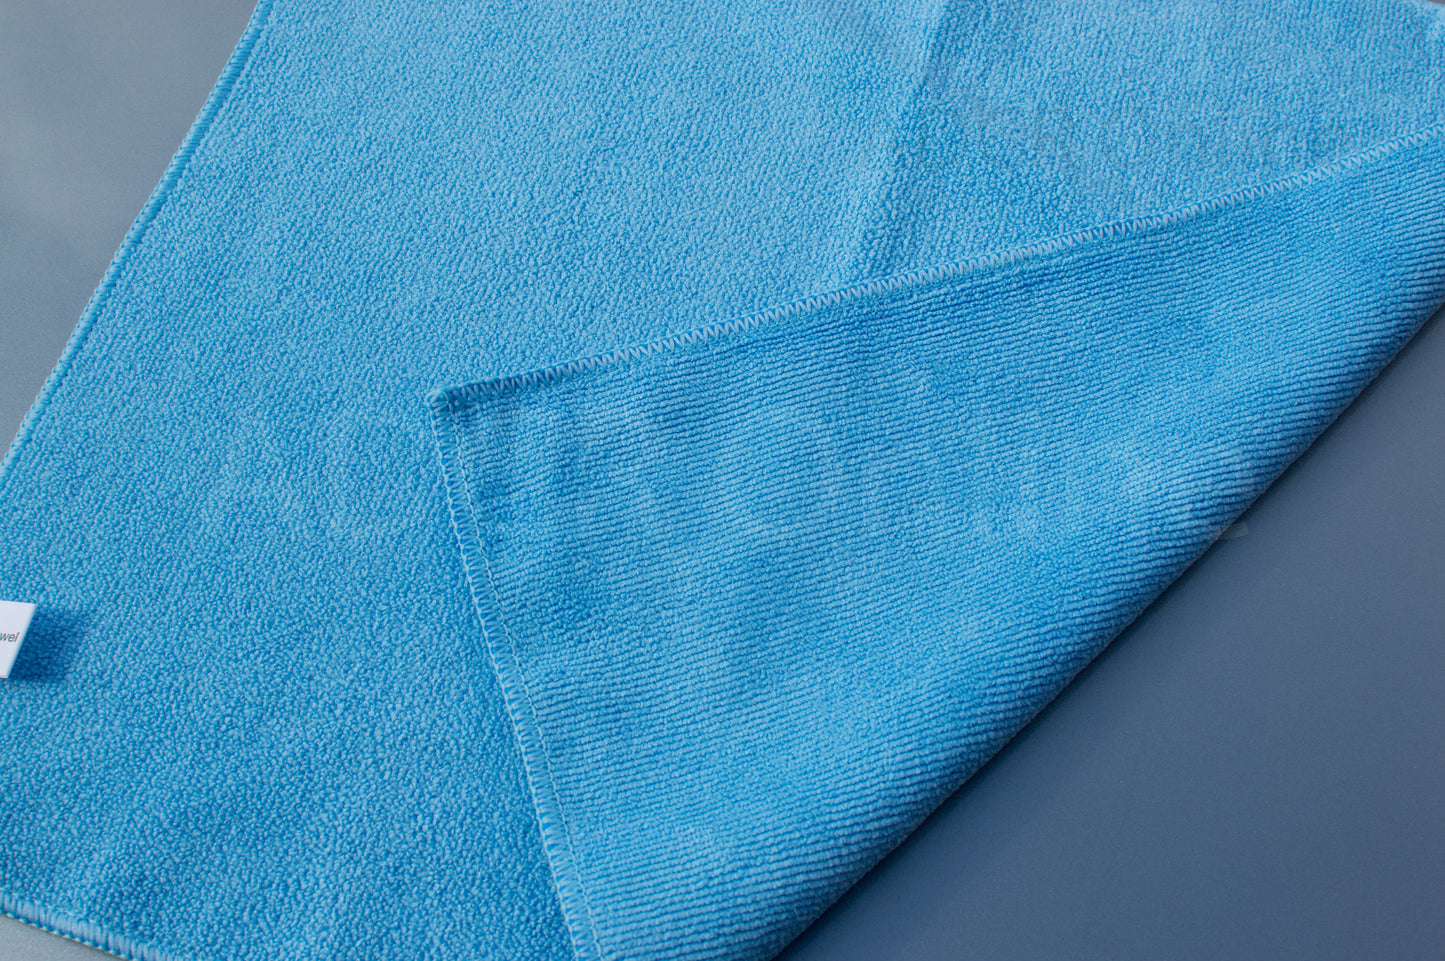 Blue General Purpose Microfibre Towel 16x16" 40x40cm 380gsm - 4 Pack